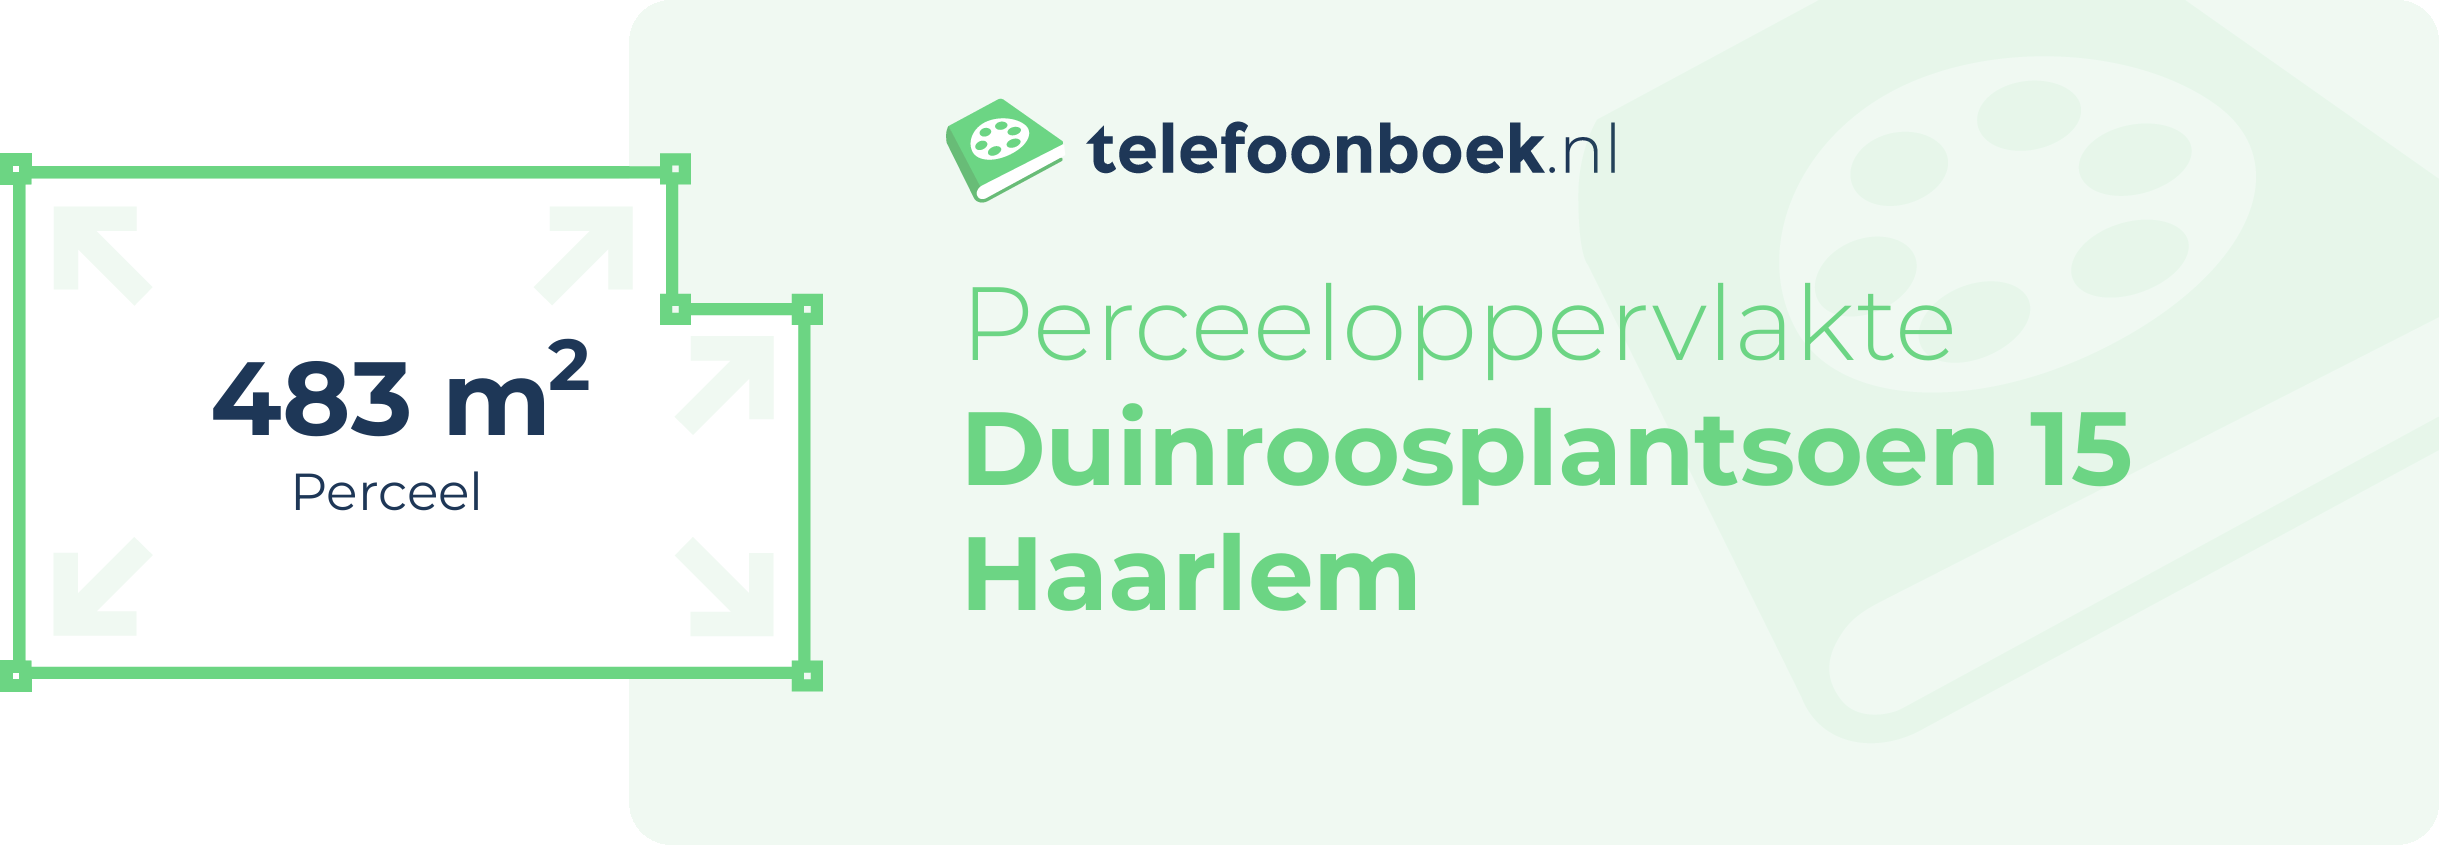 Perceeloppervlakte Duinroosplantsoen 15 Haarlem